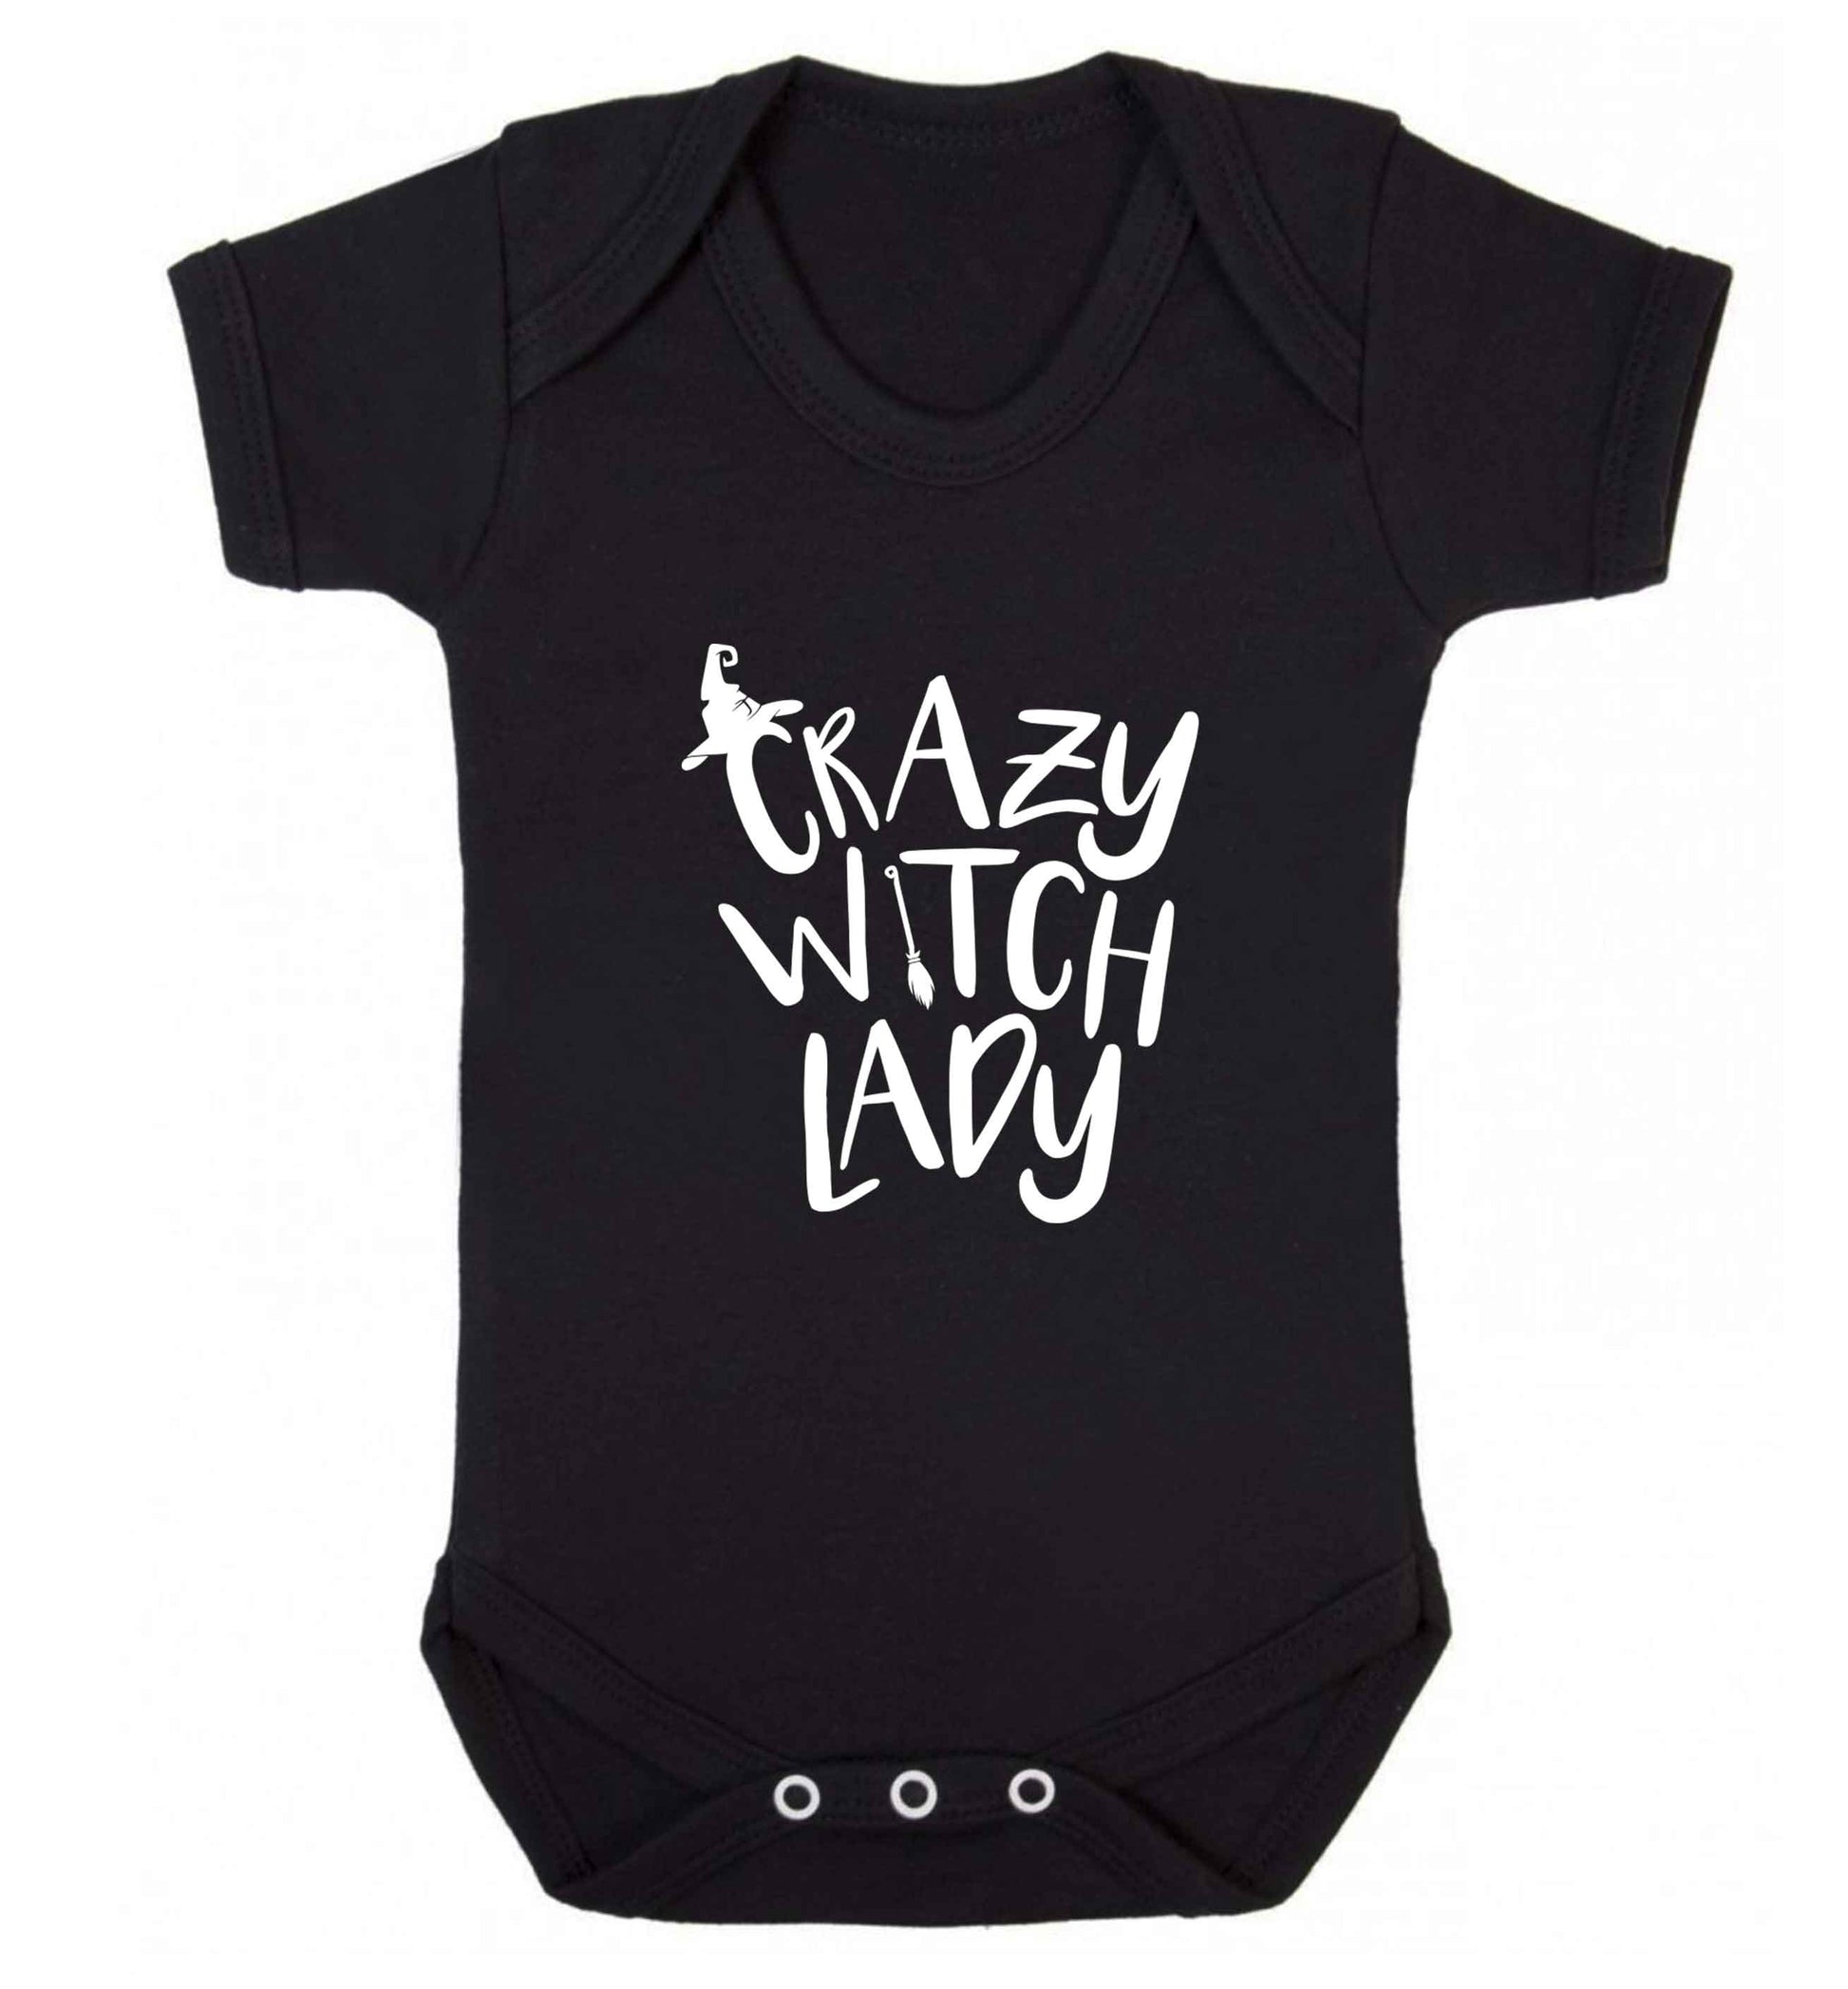 Crazy witch lady baby vest black 18-24 months